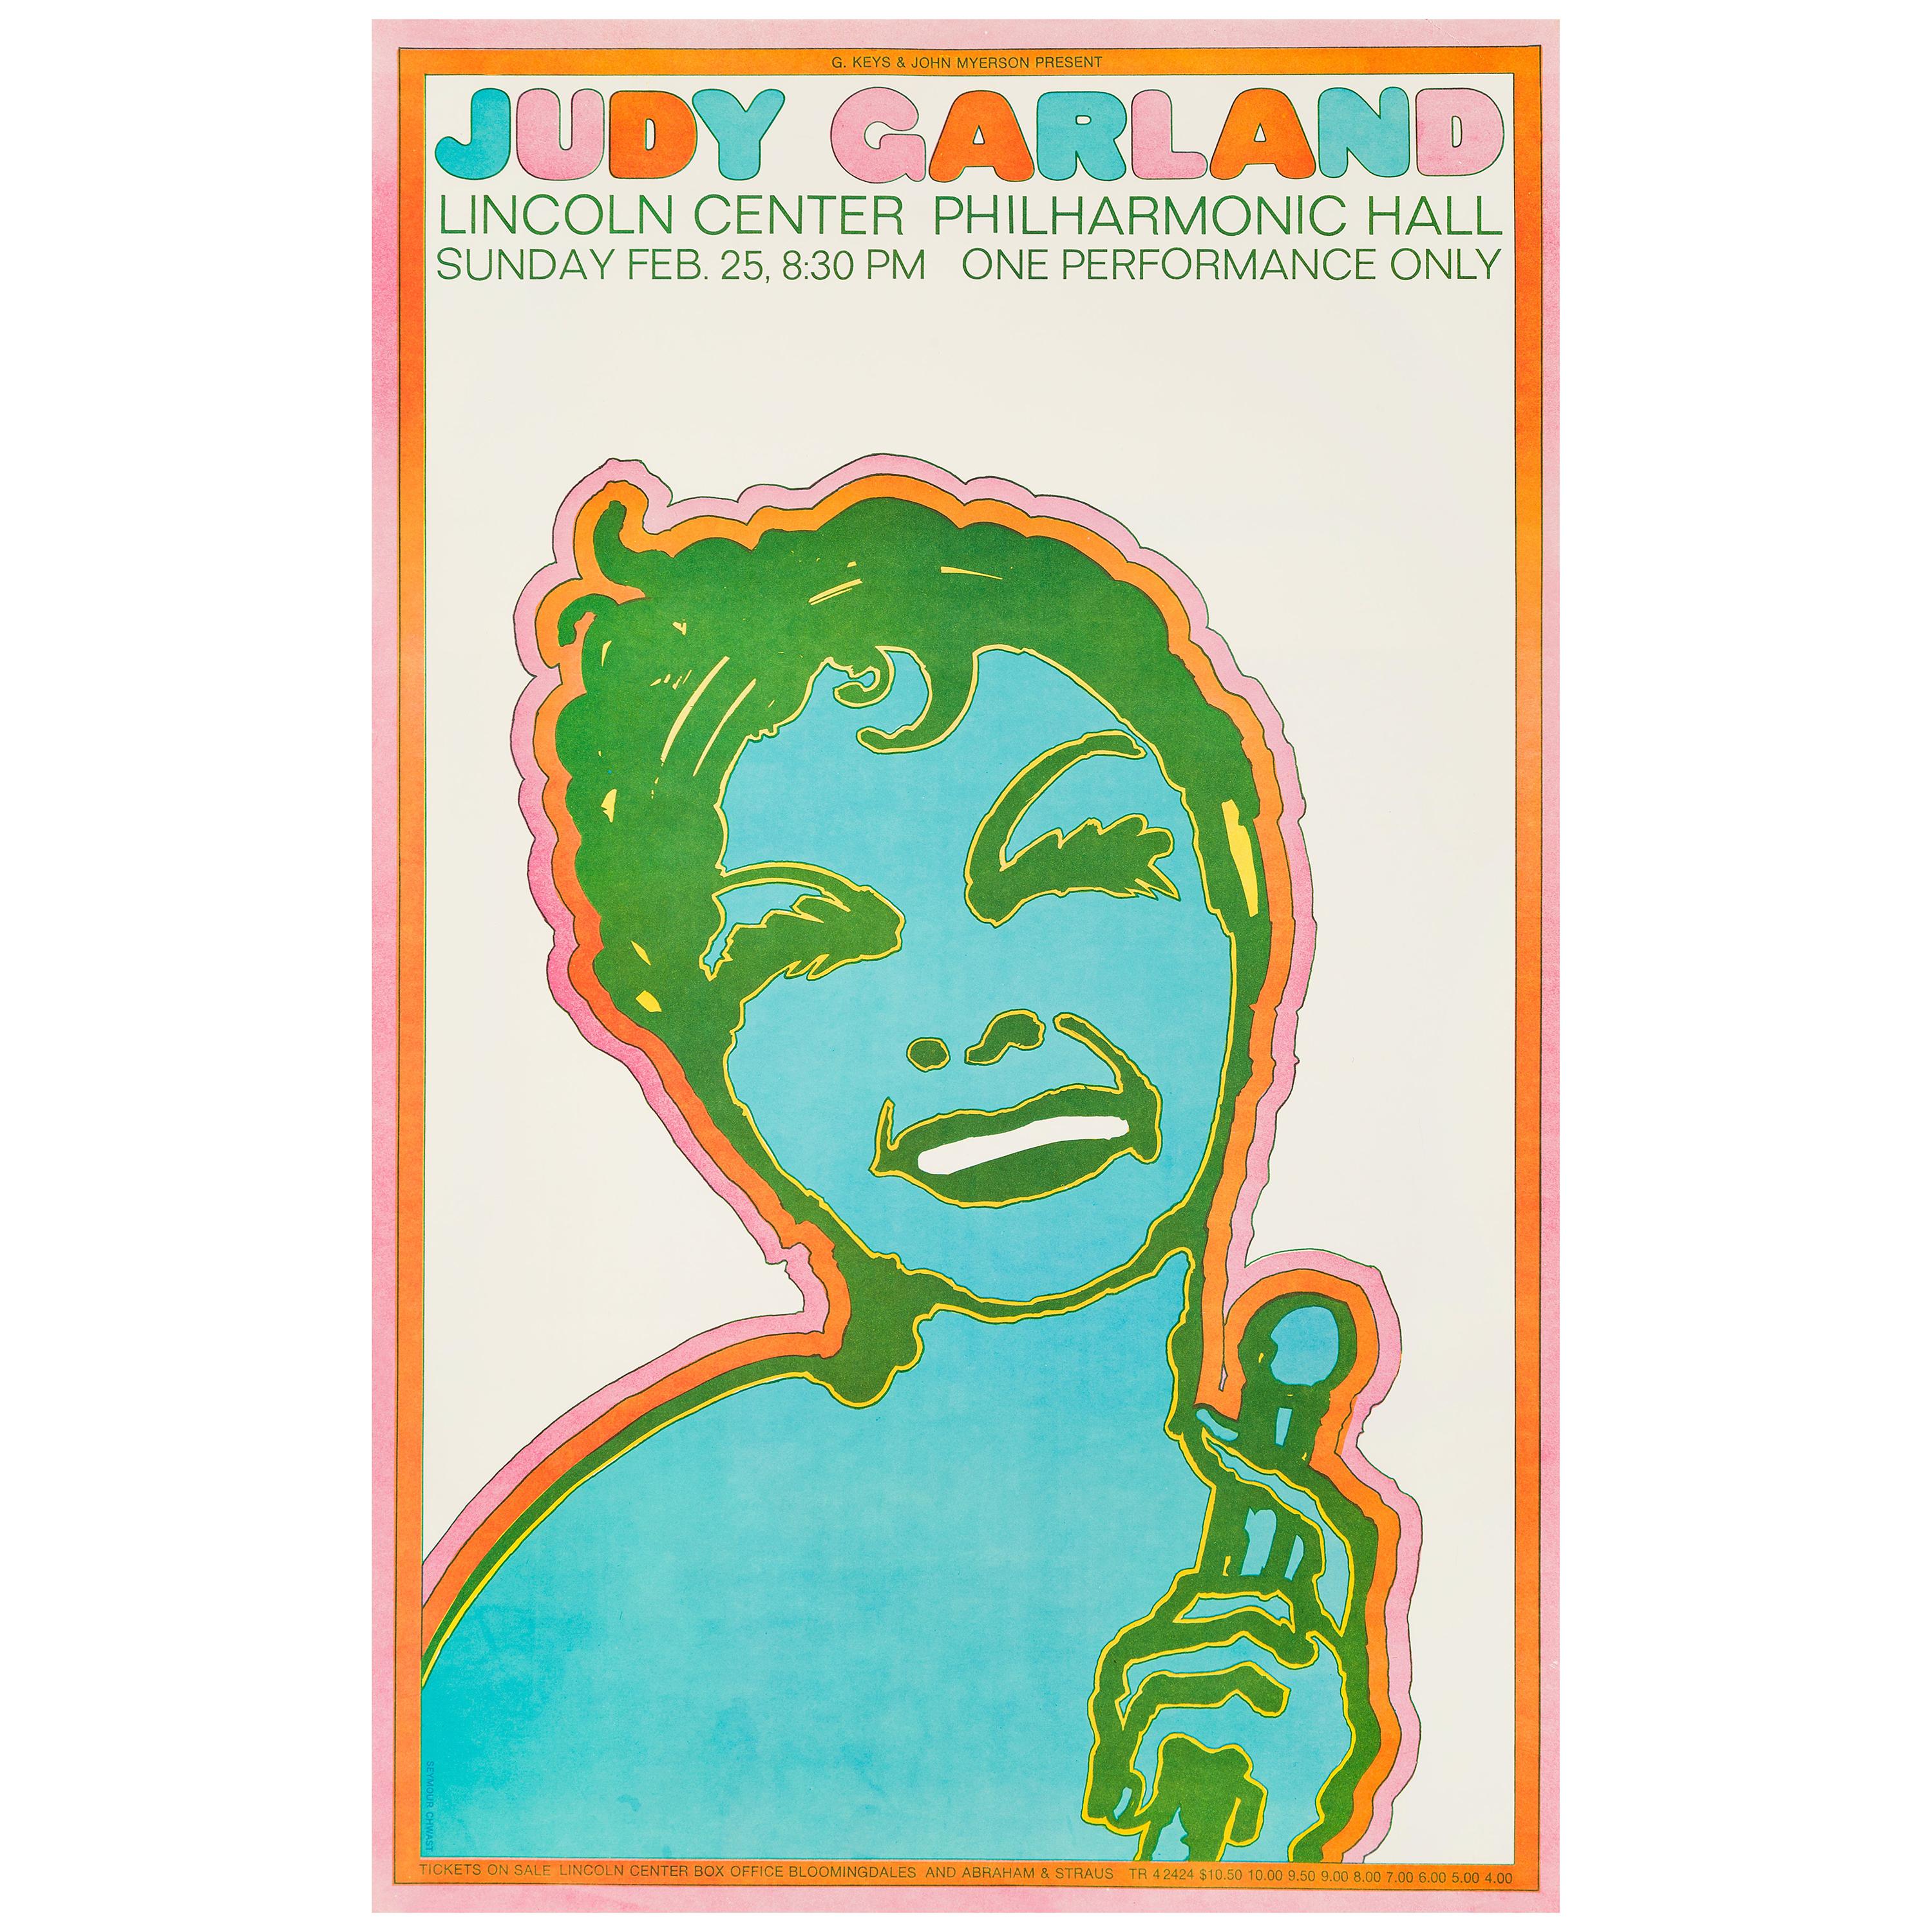 Judy Garland Original Vintage Concert Poster by Seymour Chwast, 1968